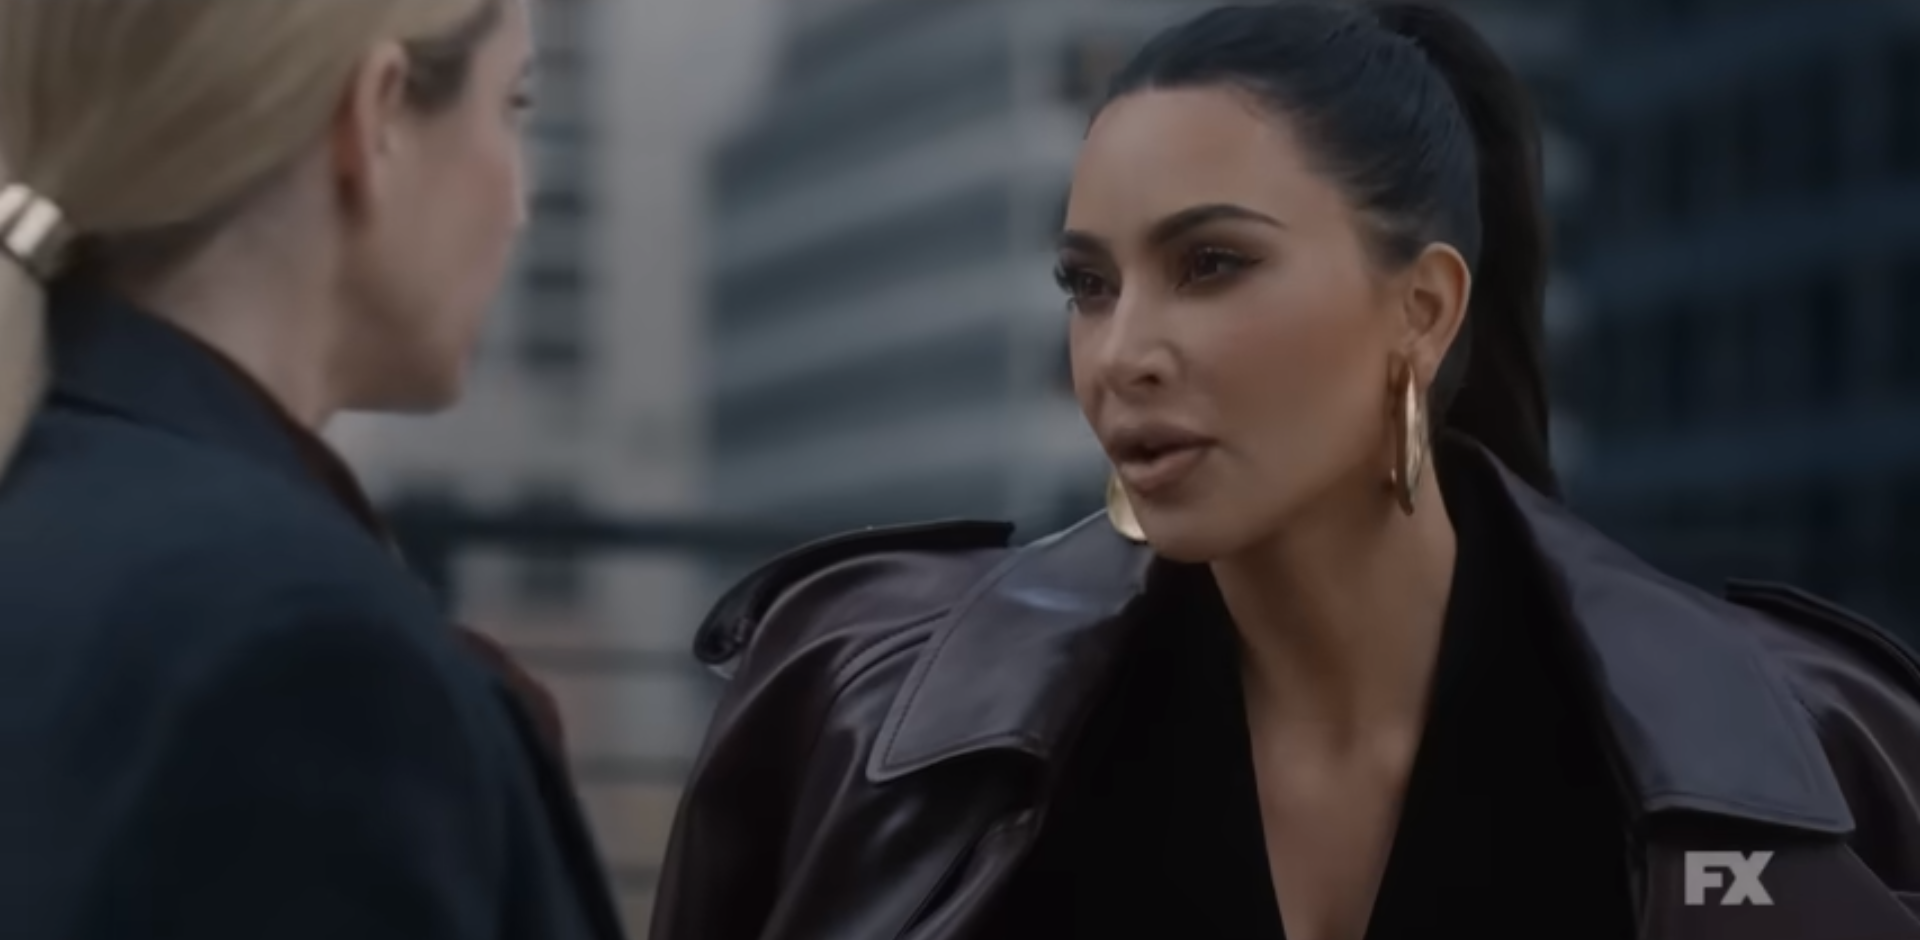 WATCH: The official trailer for season 12 of American Horror Story –  starring Kim Kardashian